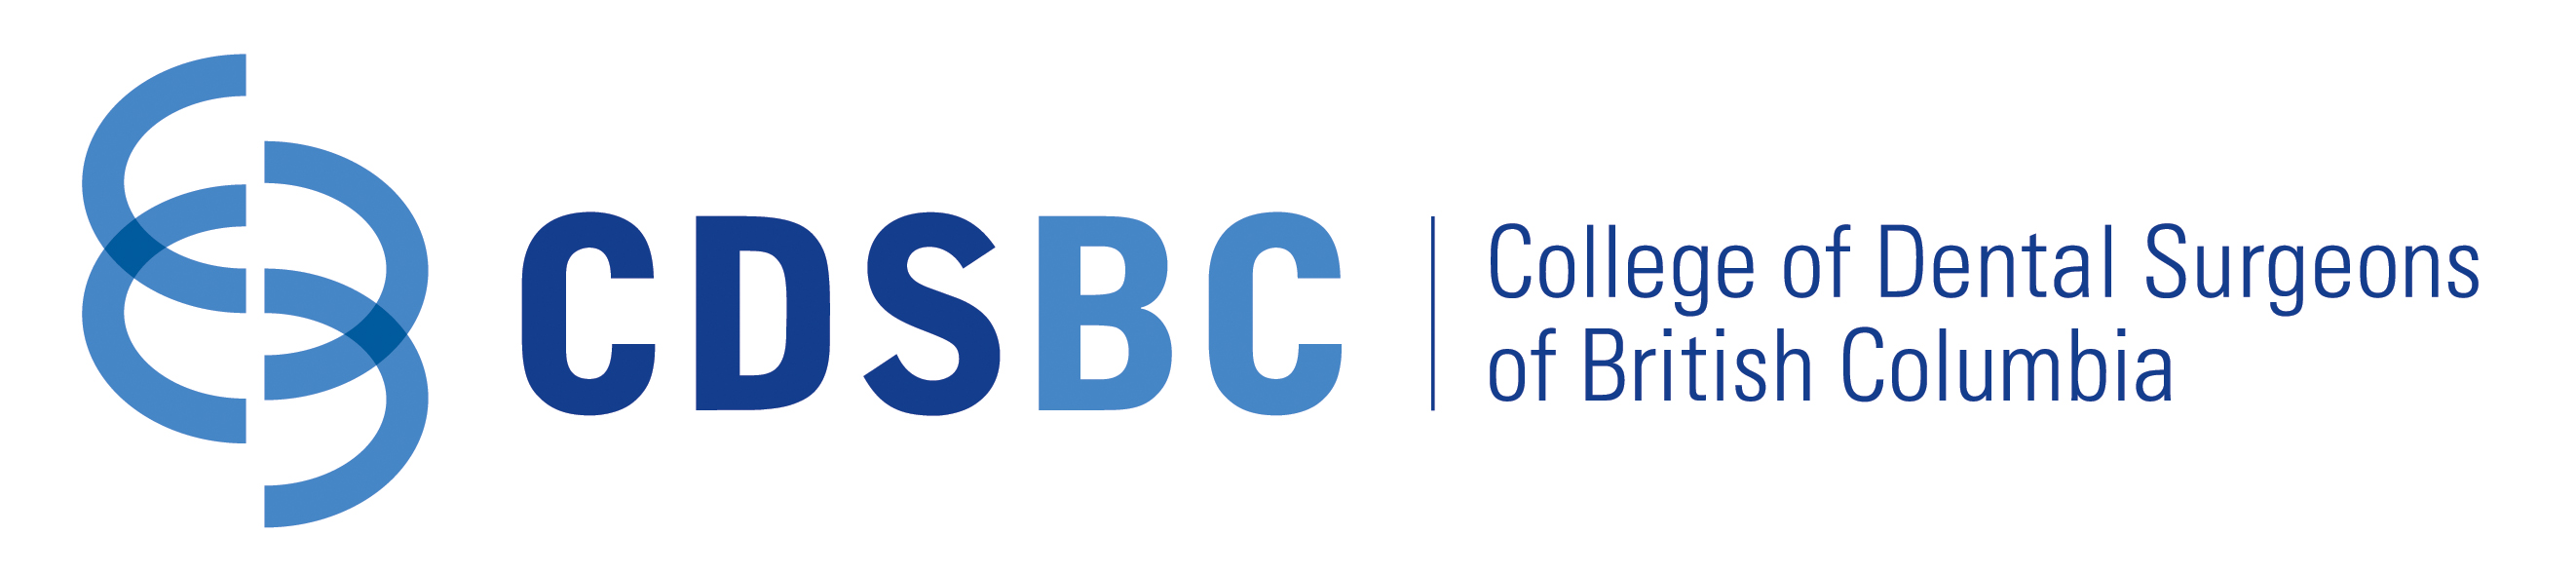 CDSBC Colour Logo.jpg